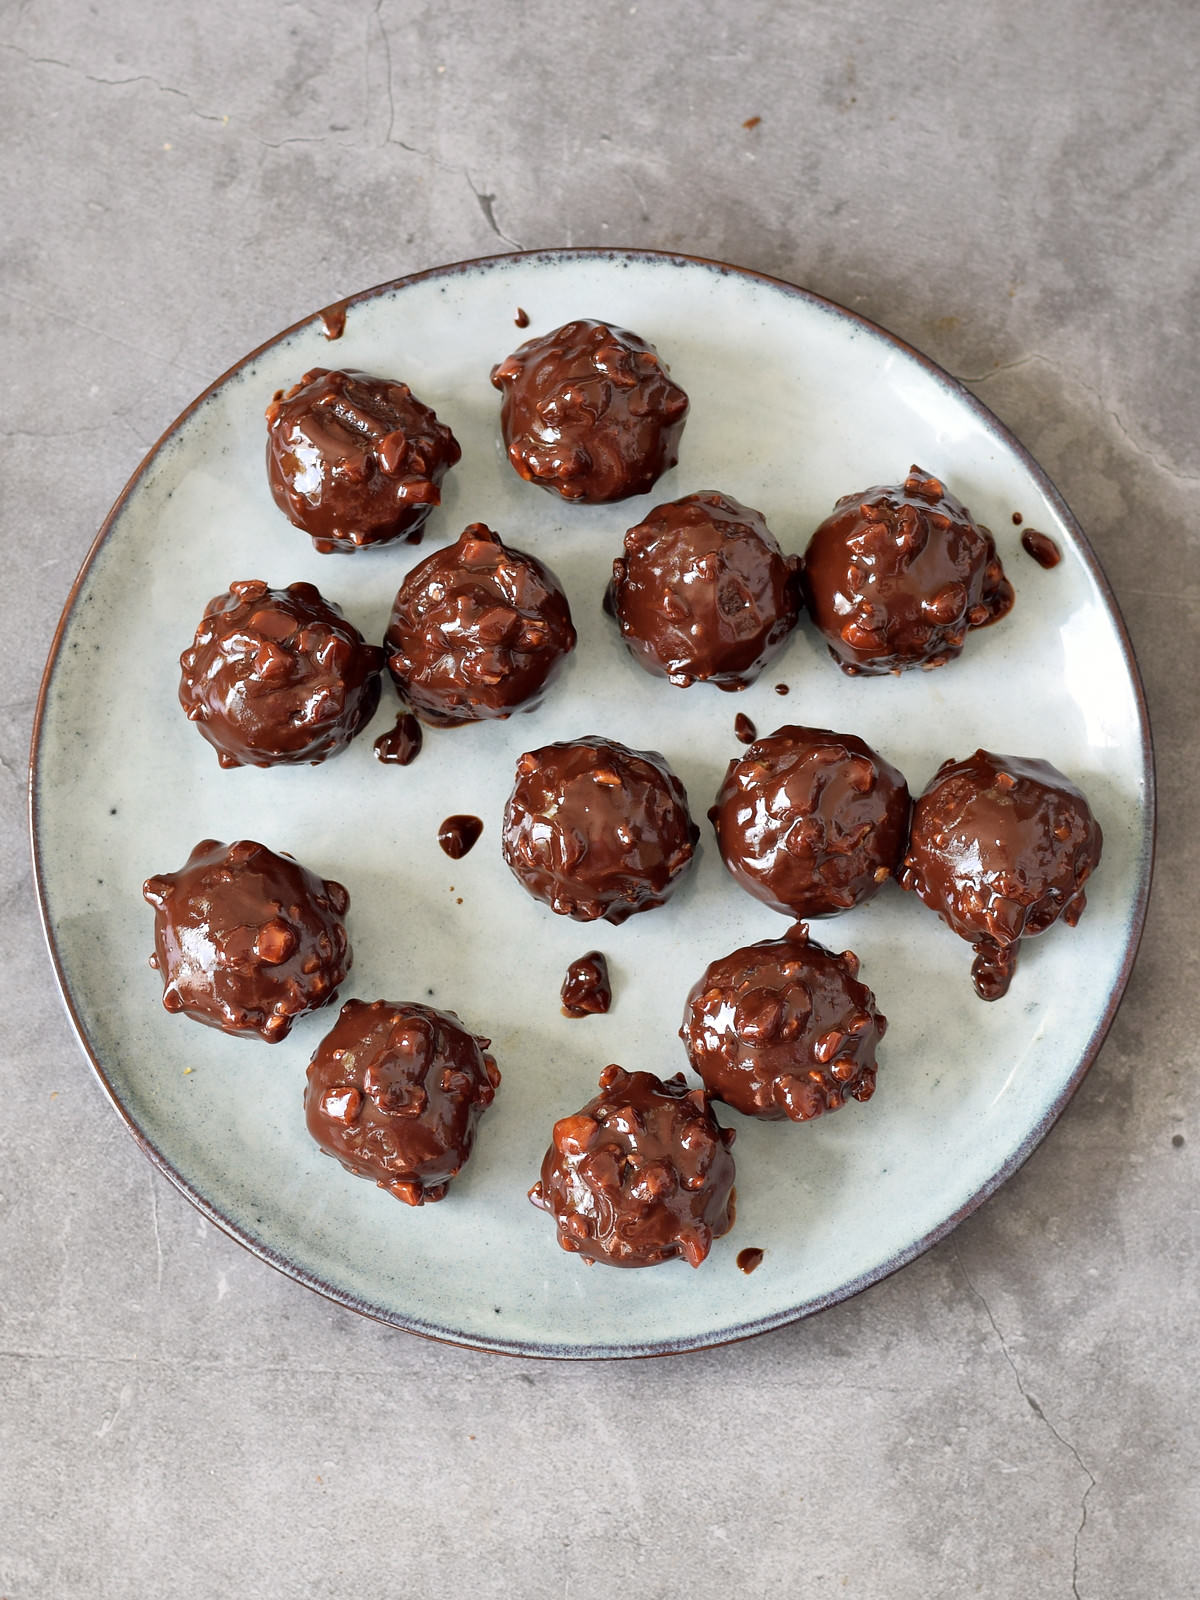 13 hazelnut truffels dipped in chocolate on a plate